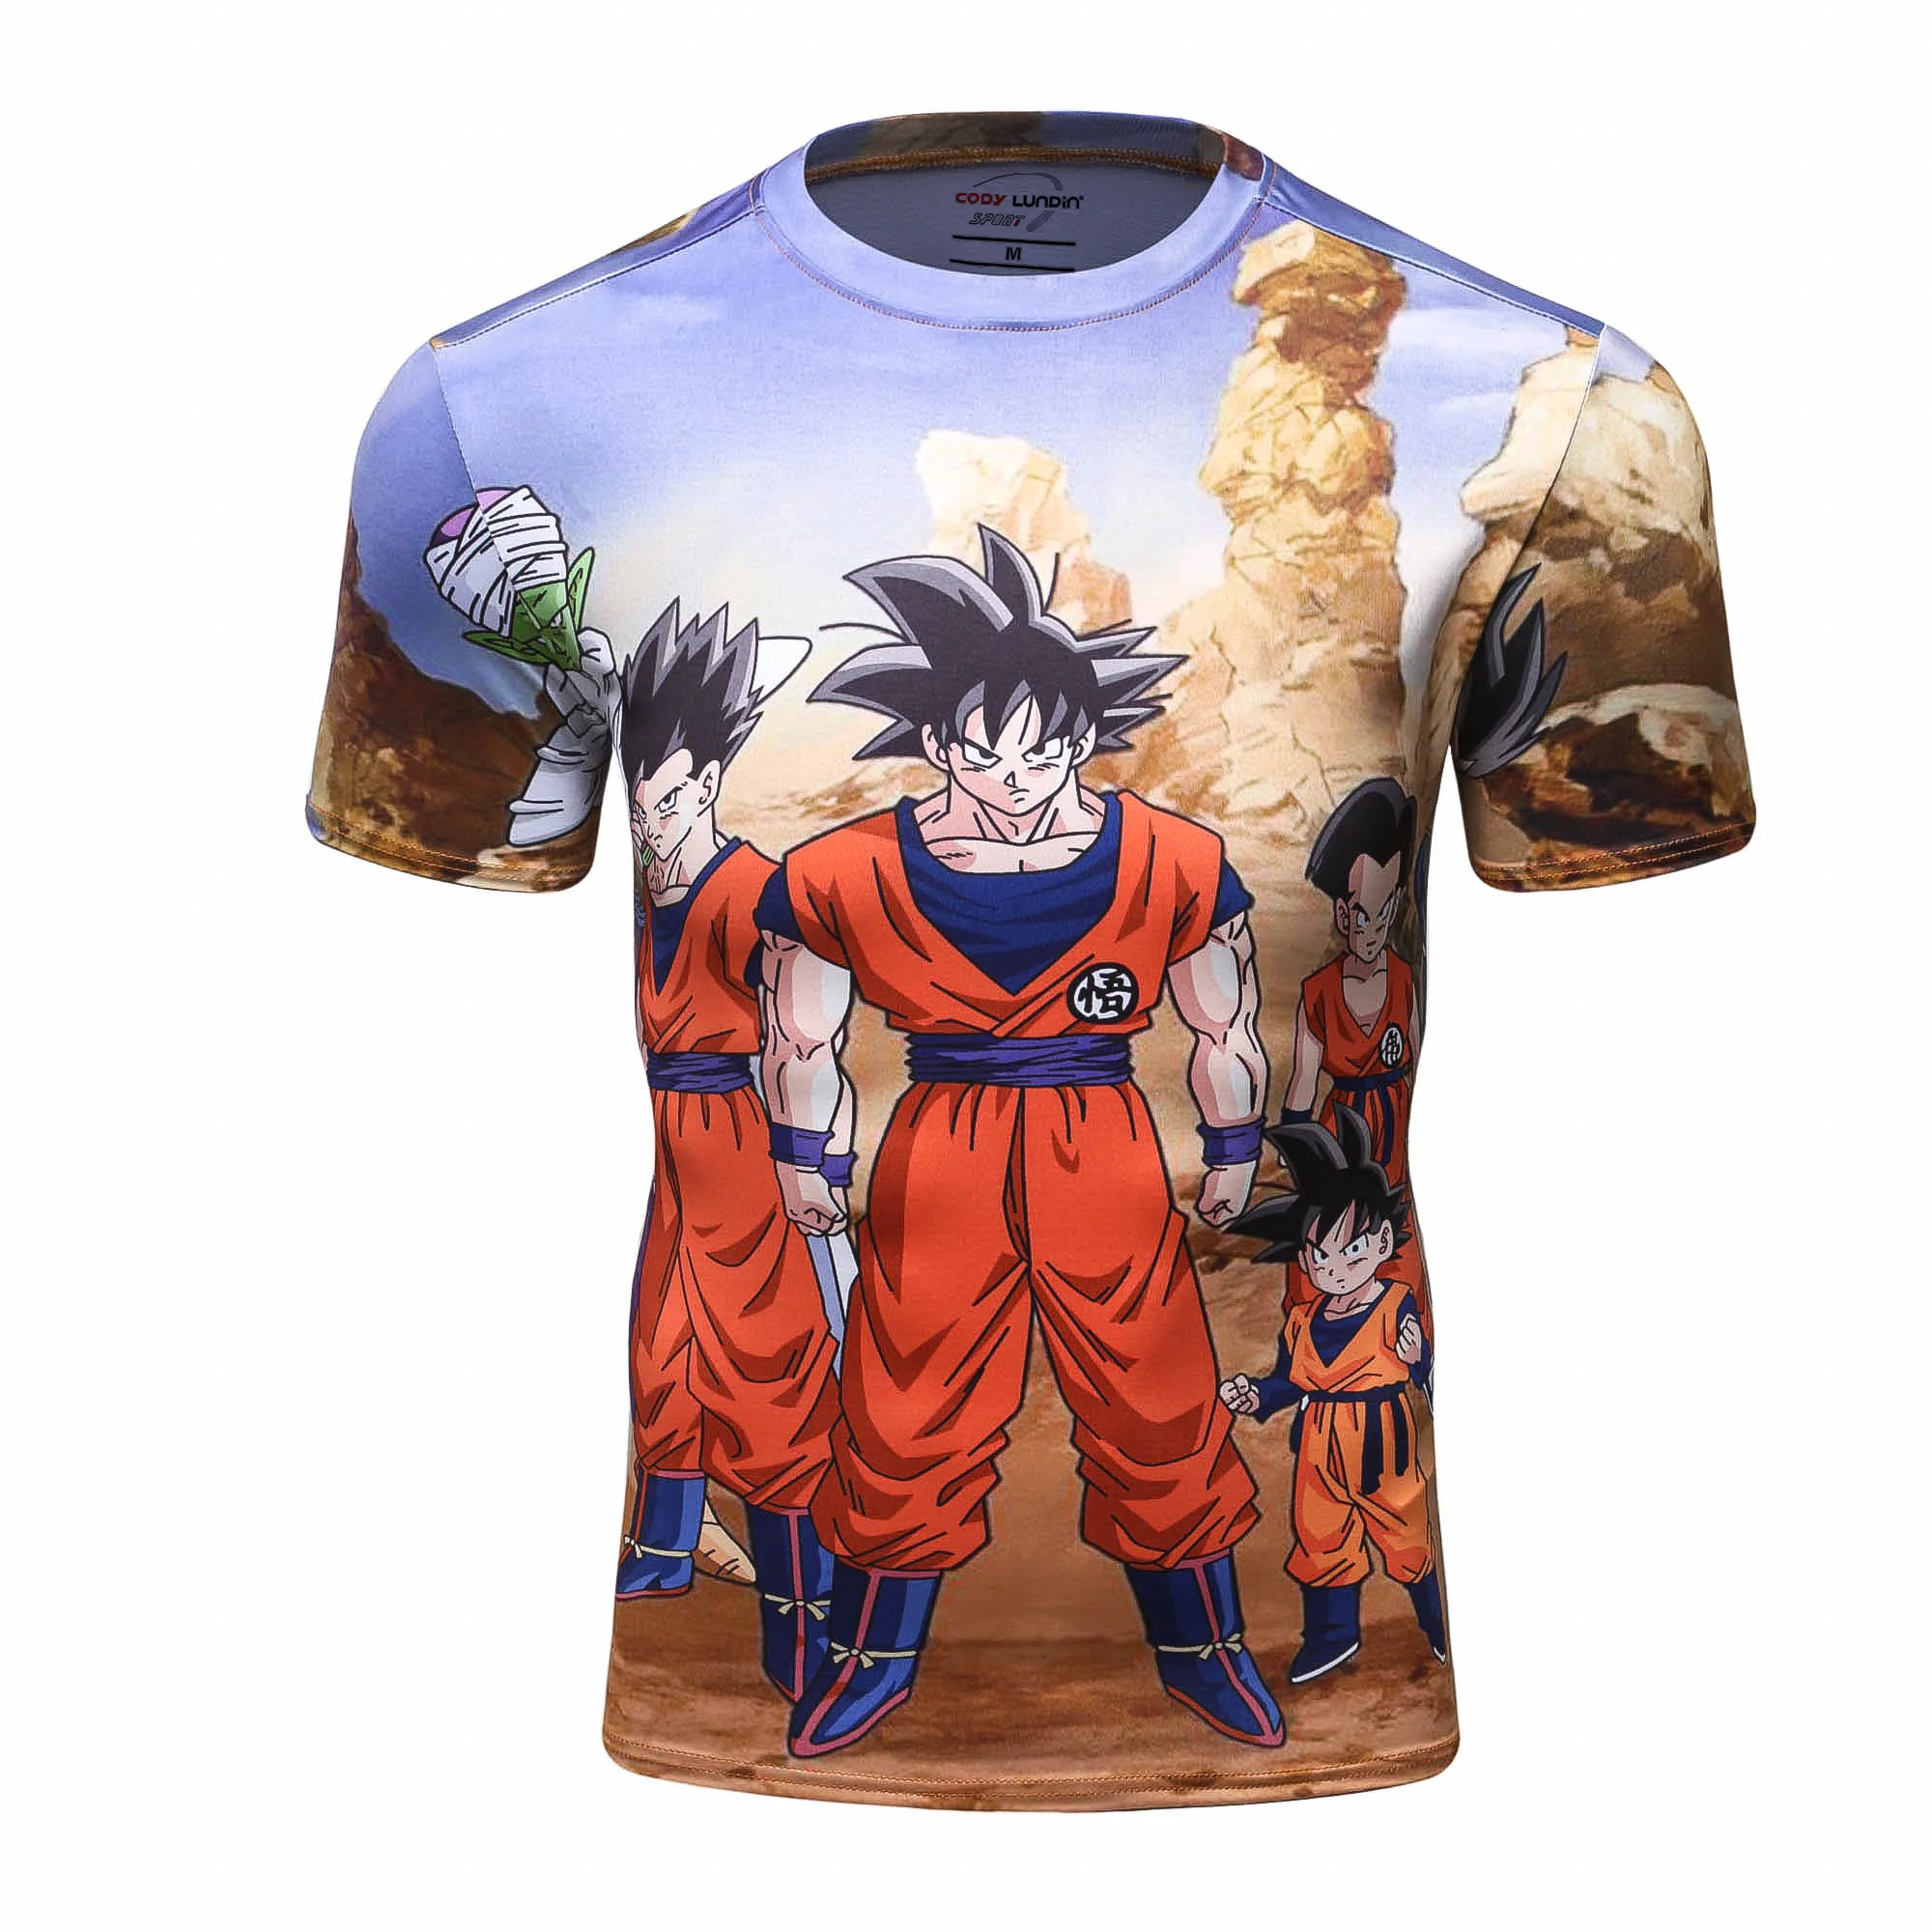 

Cody Lundin Anime Clothing 3D Printed Dragon Ball Z Gym Tshirt